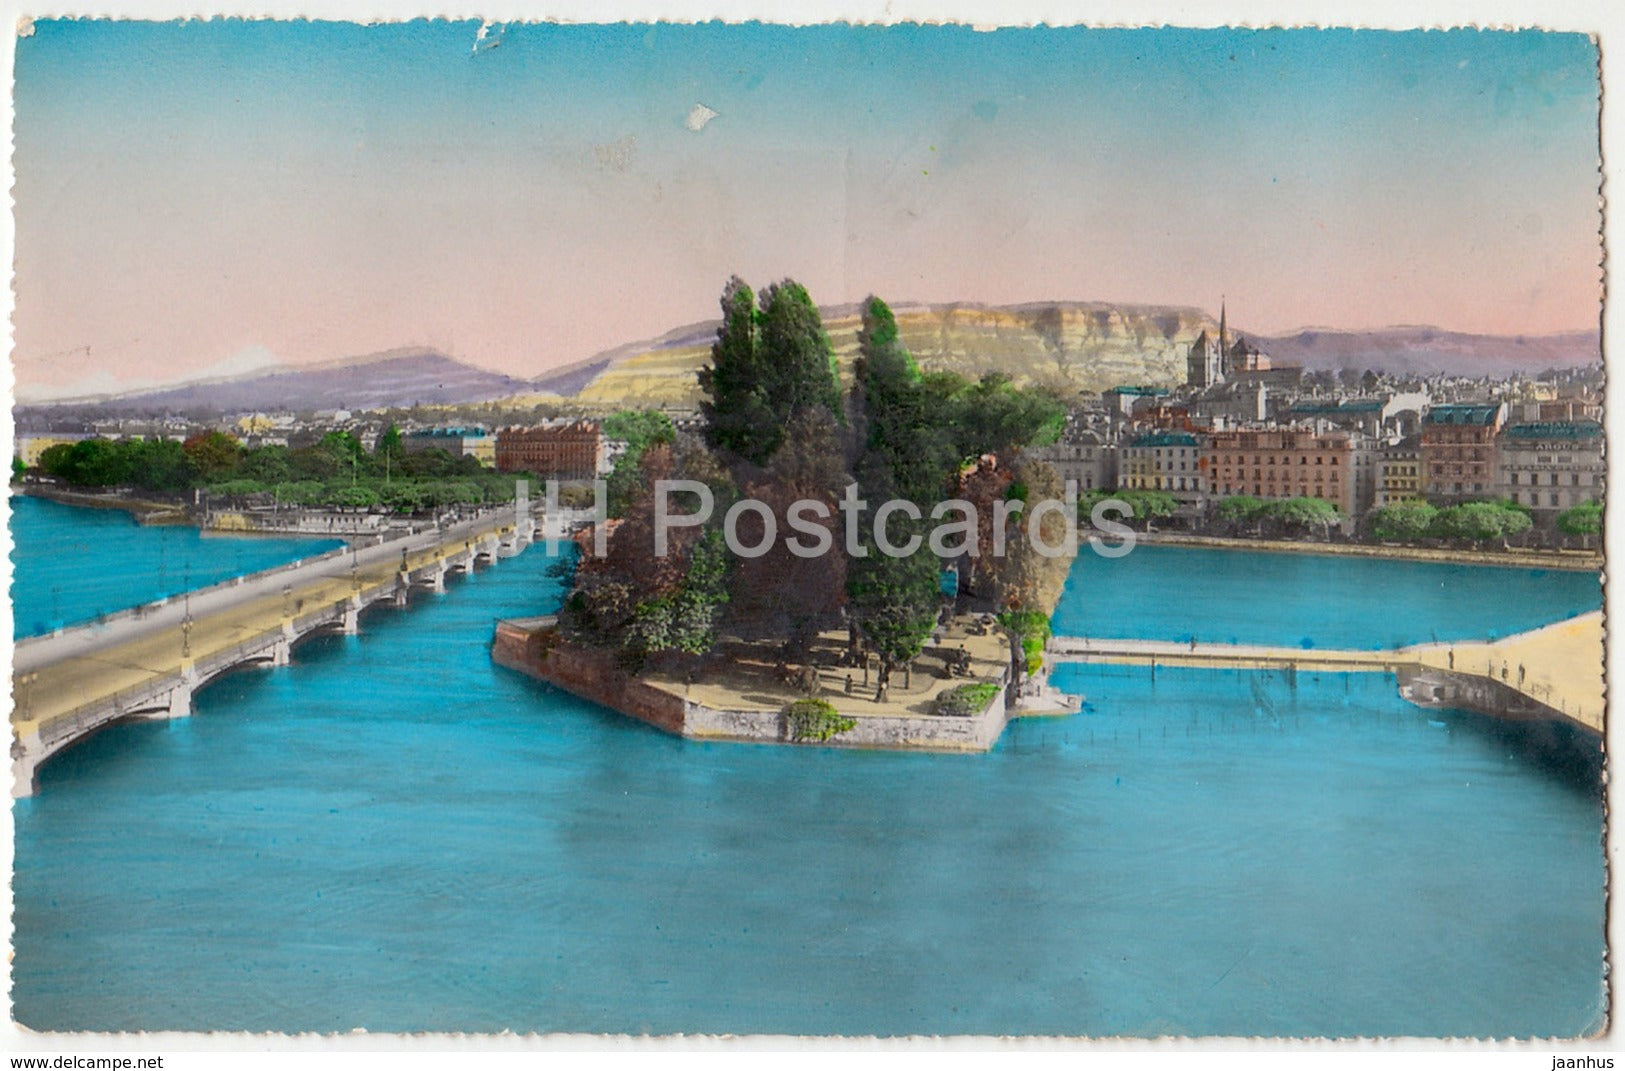 Geneve - Geneva -  Ile J.-J. Rousseau et le Mont Blanc - 7001 - Switzerland - old postcard - used - JH Postcards